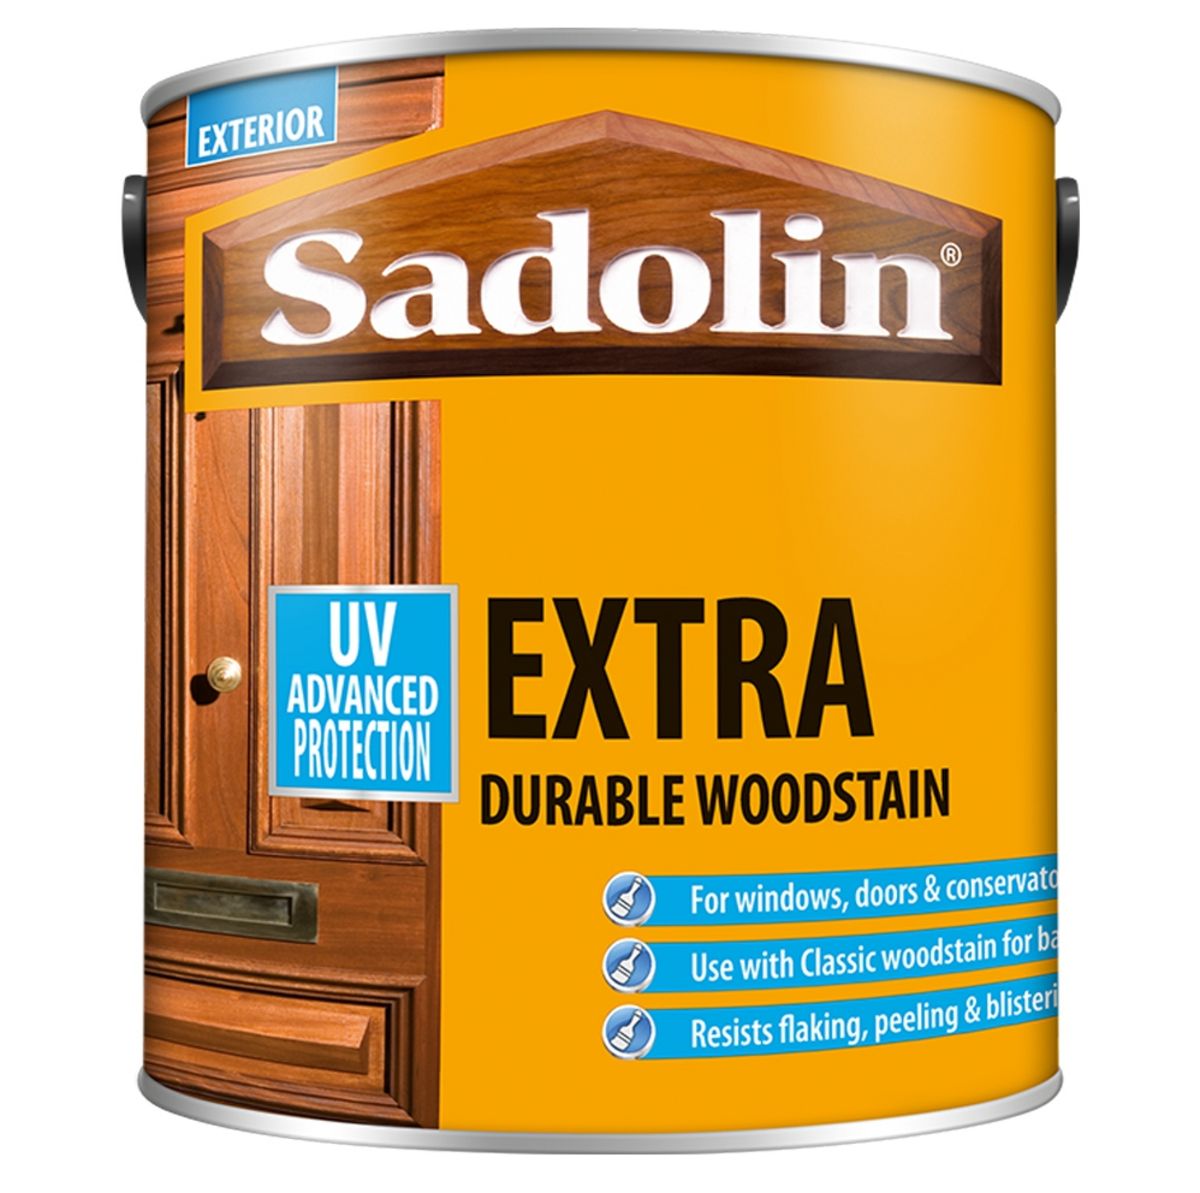 sadolin-extra-durable-woodstain-2.5L-1.jpg